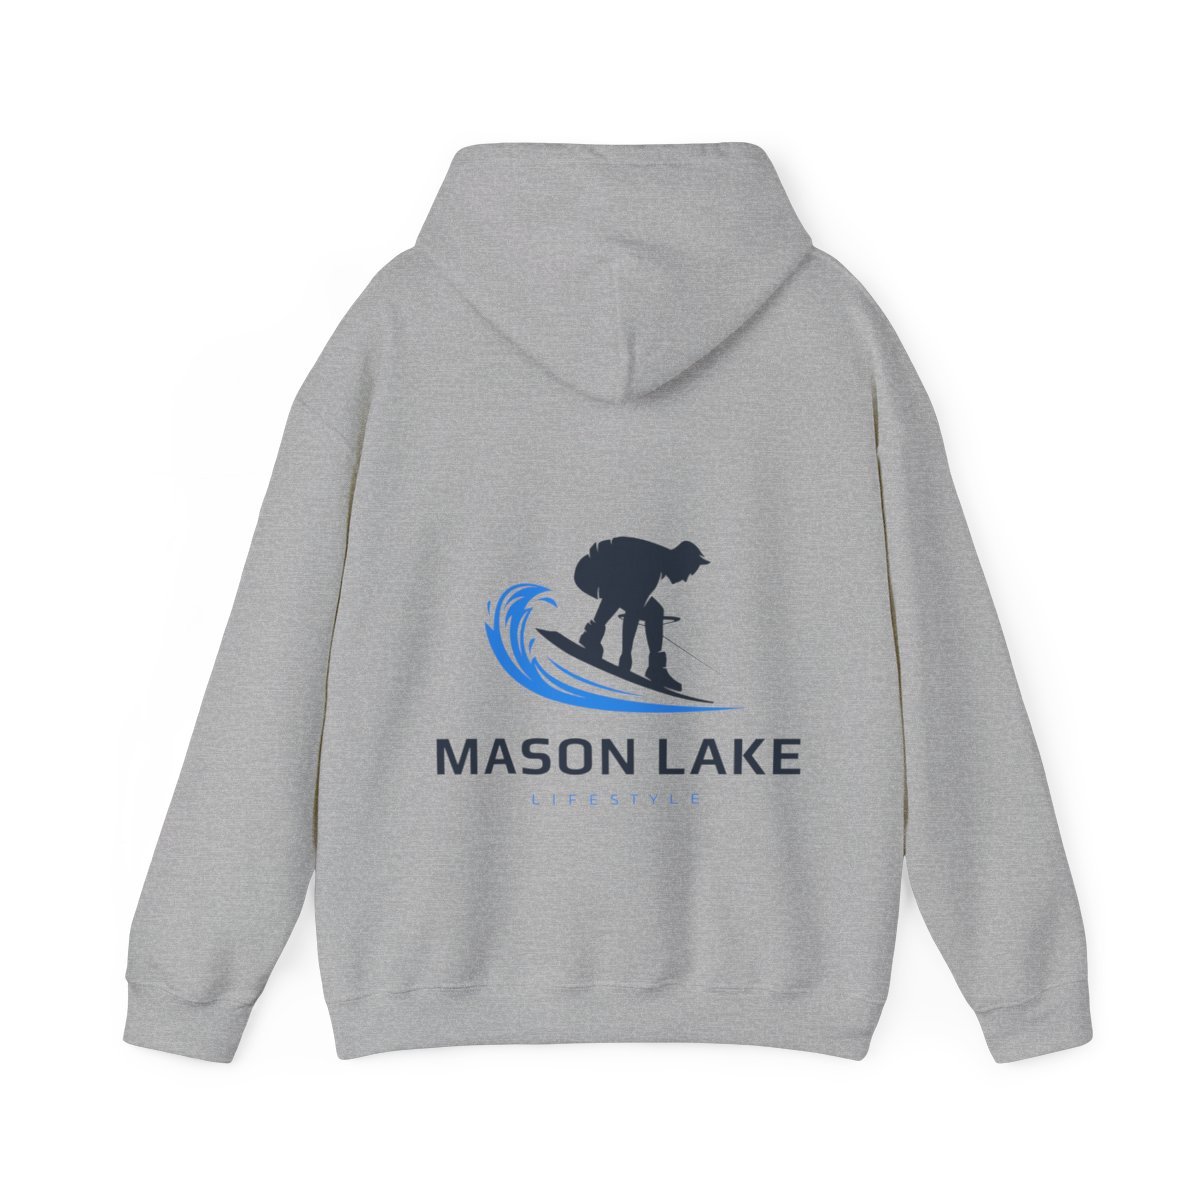 Mason Lake wakeboarder Hoodie product thumbnail image